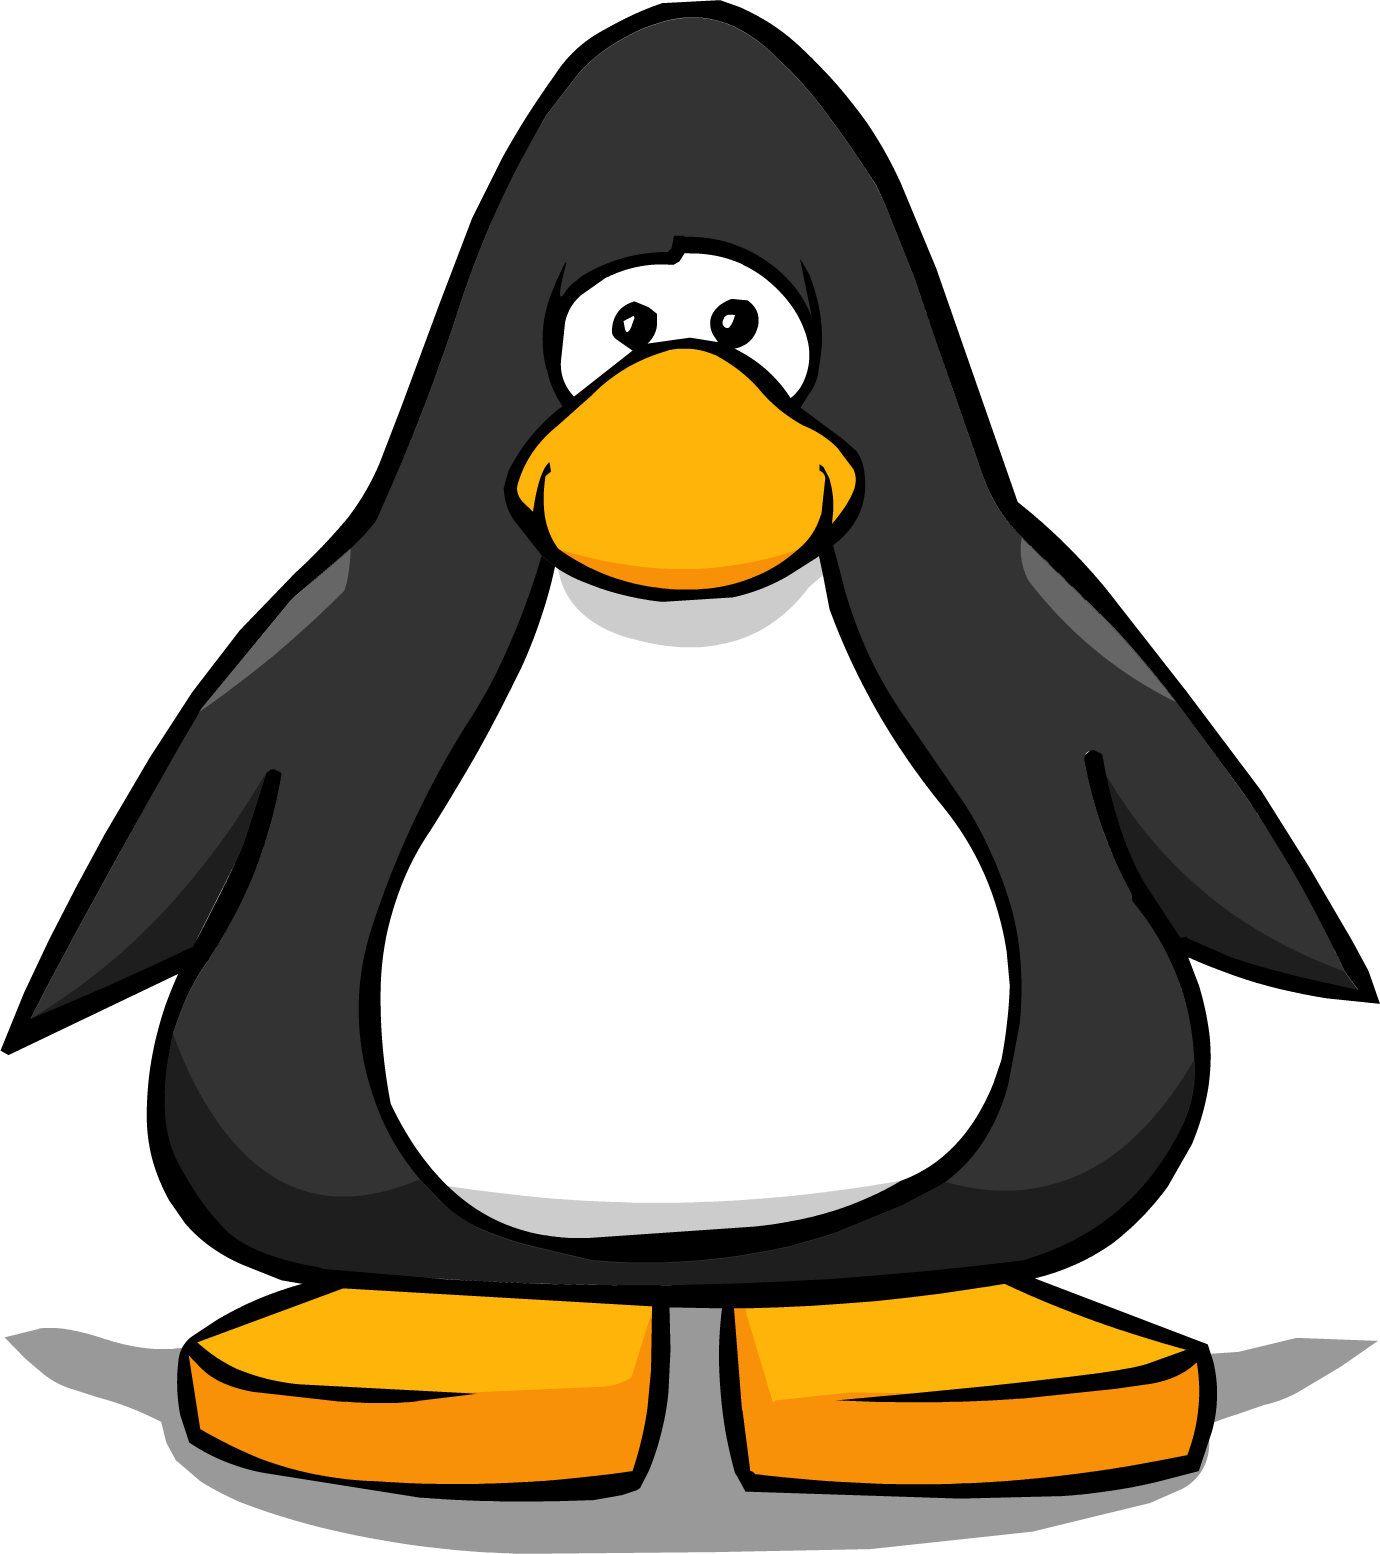 Club penguin is back, Club Penguin